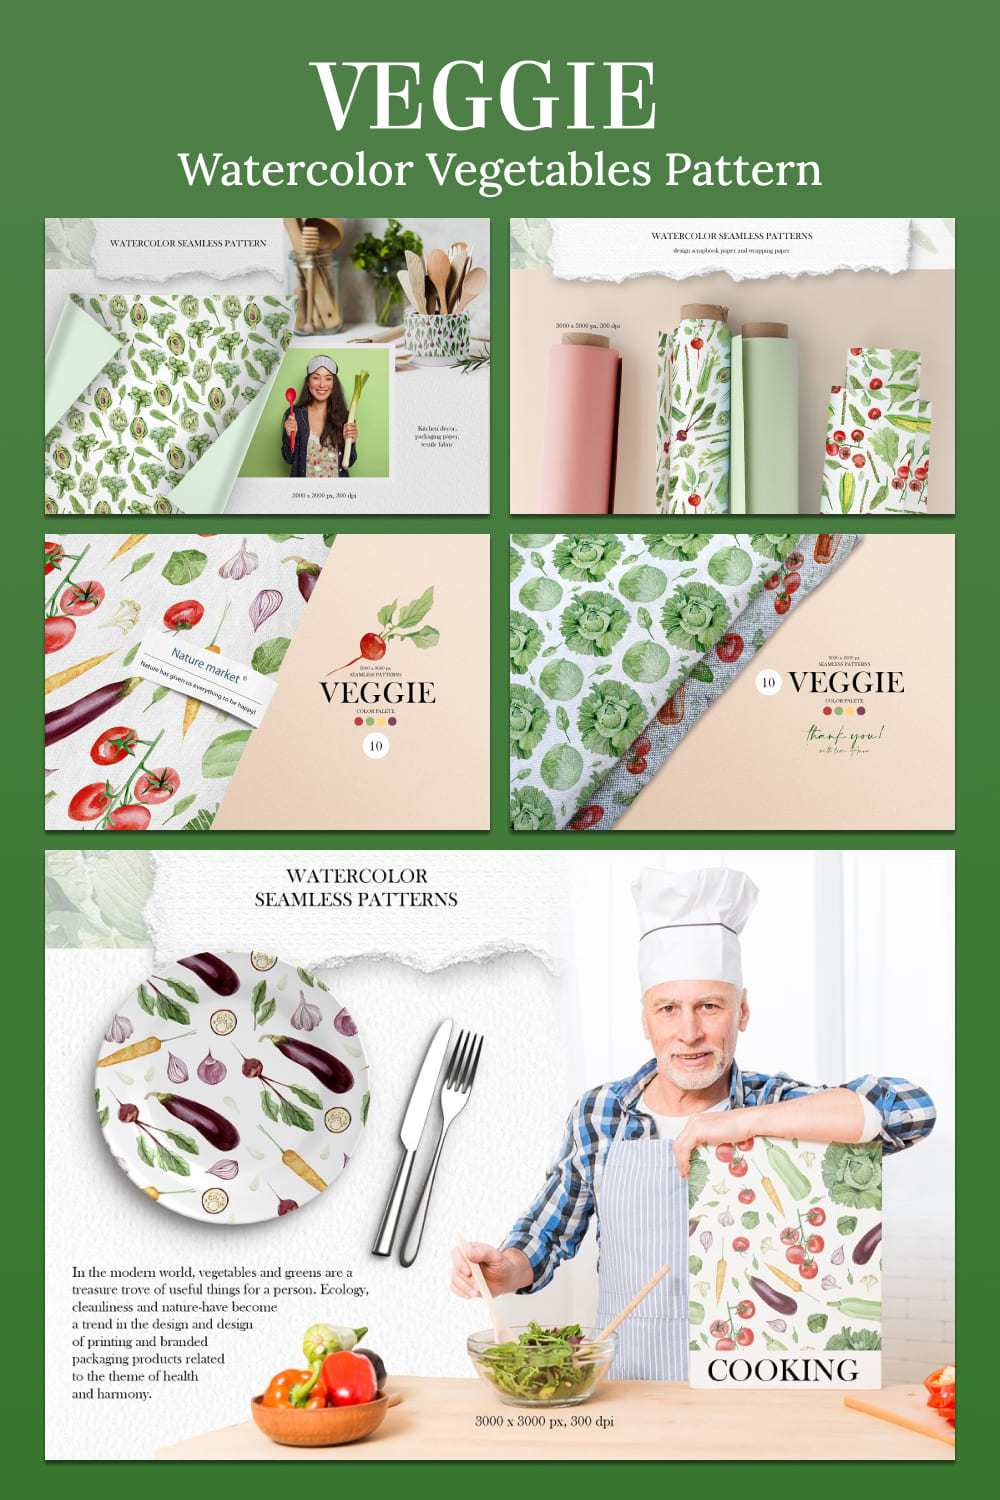 Veggie watercolor vegetables pattern - pinterest image preview.